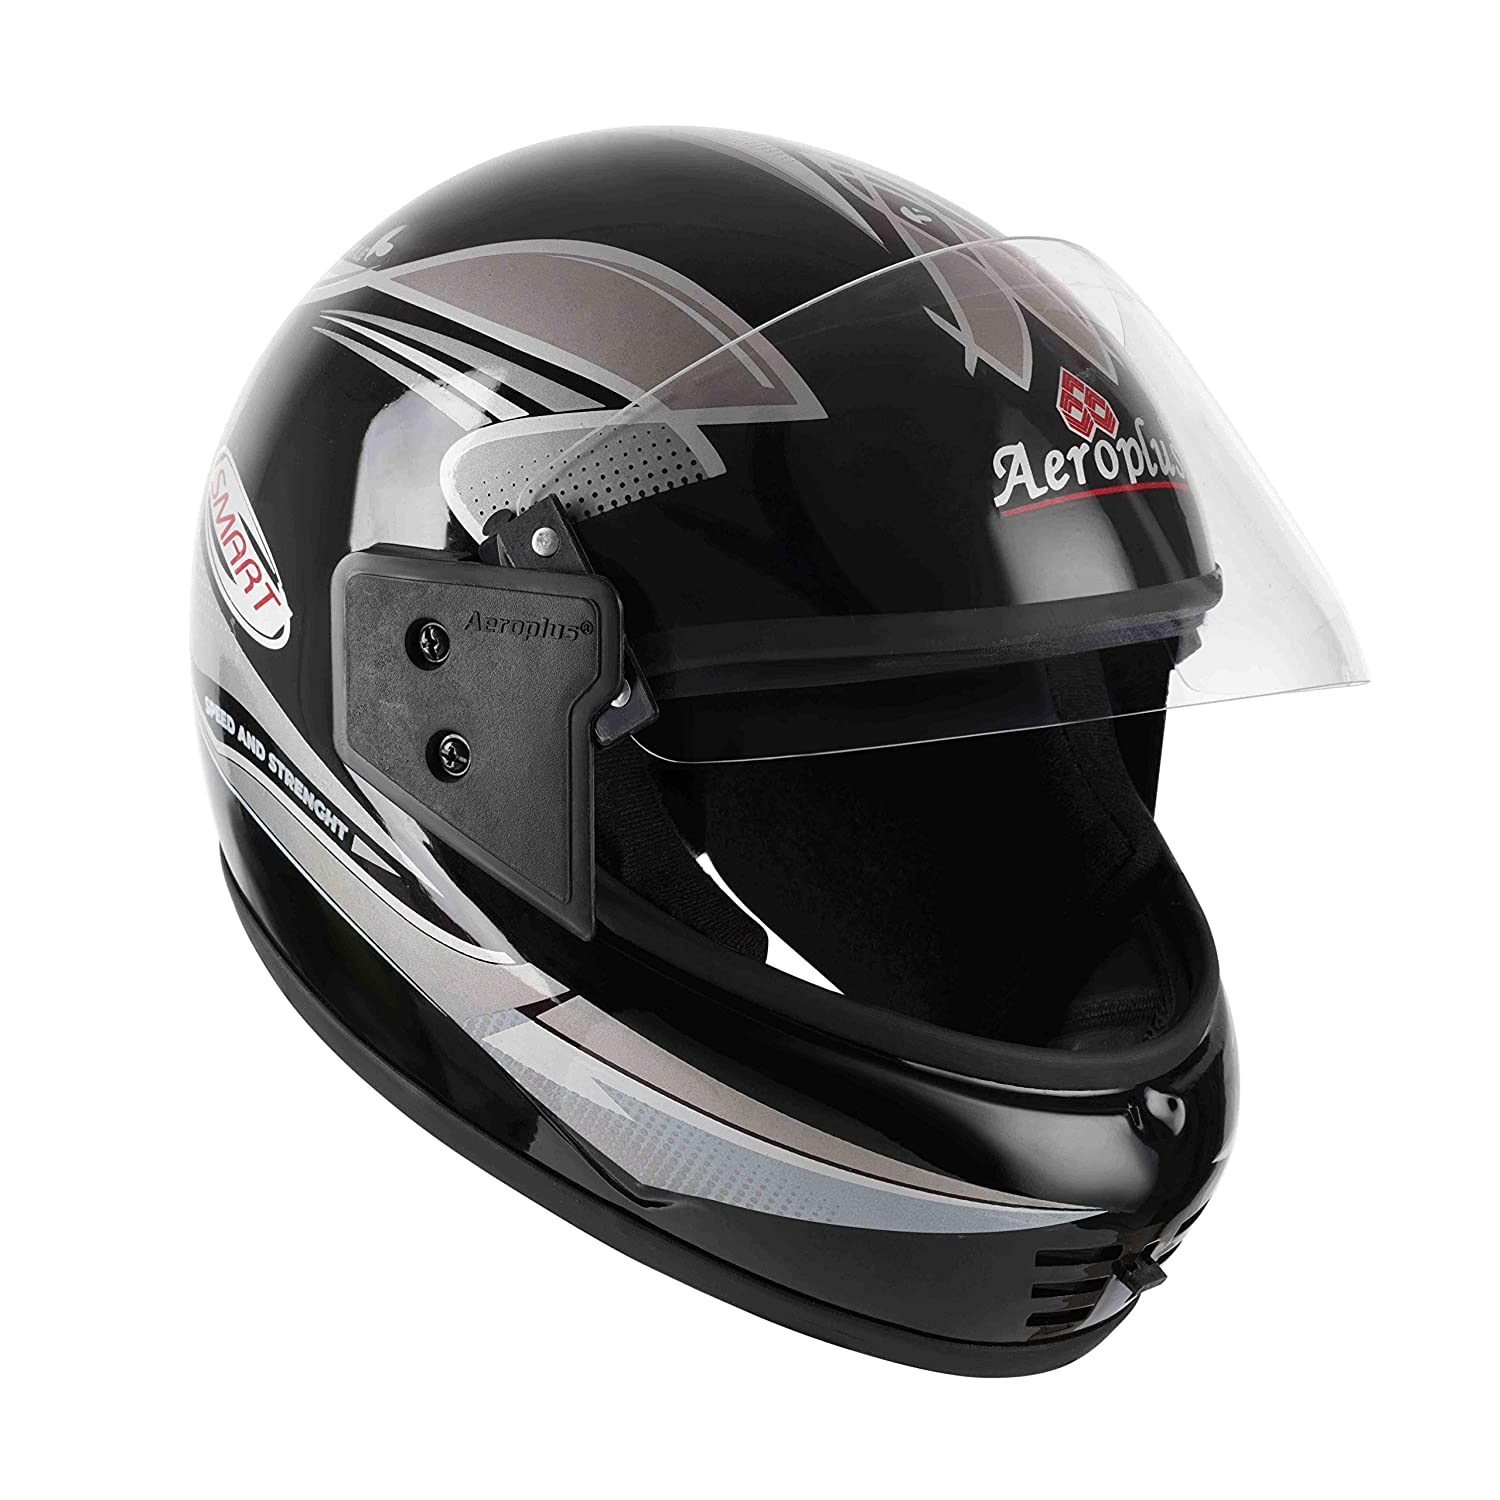 Detec™ Turtle Aeroplus Smart Full Face Helmet